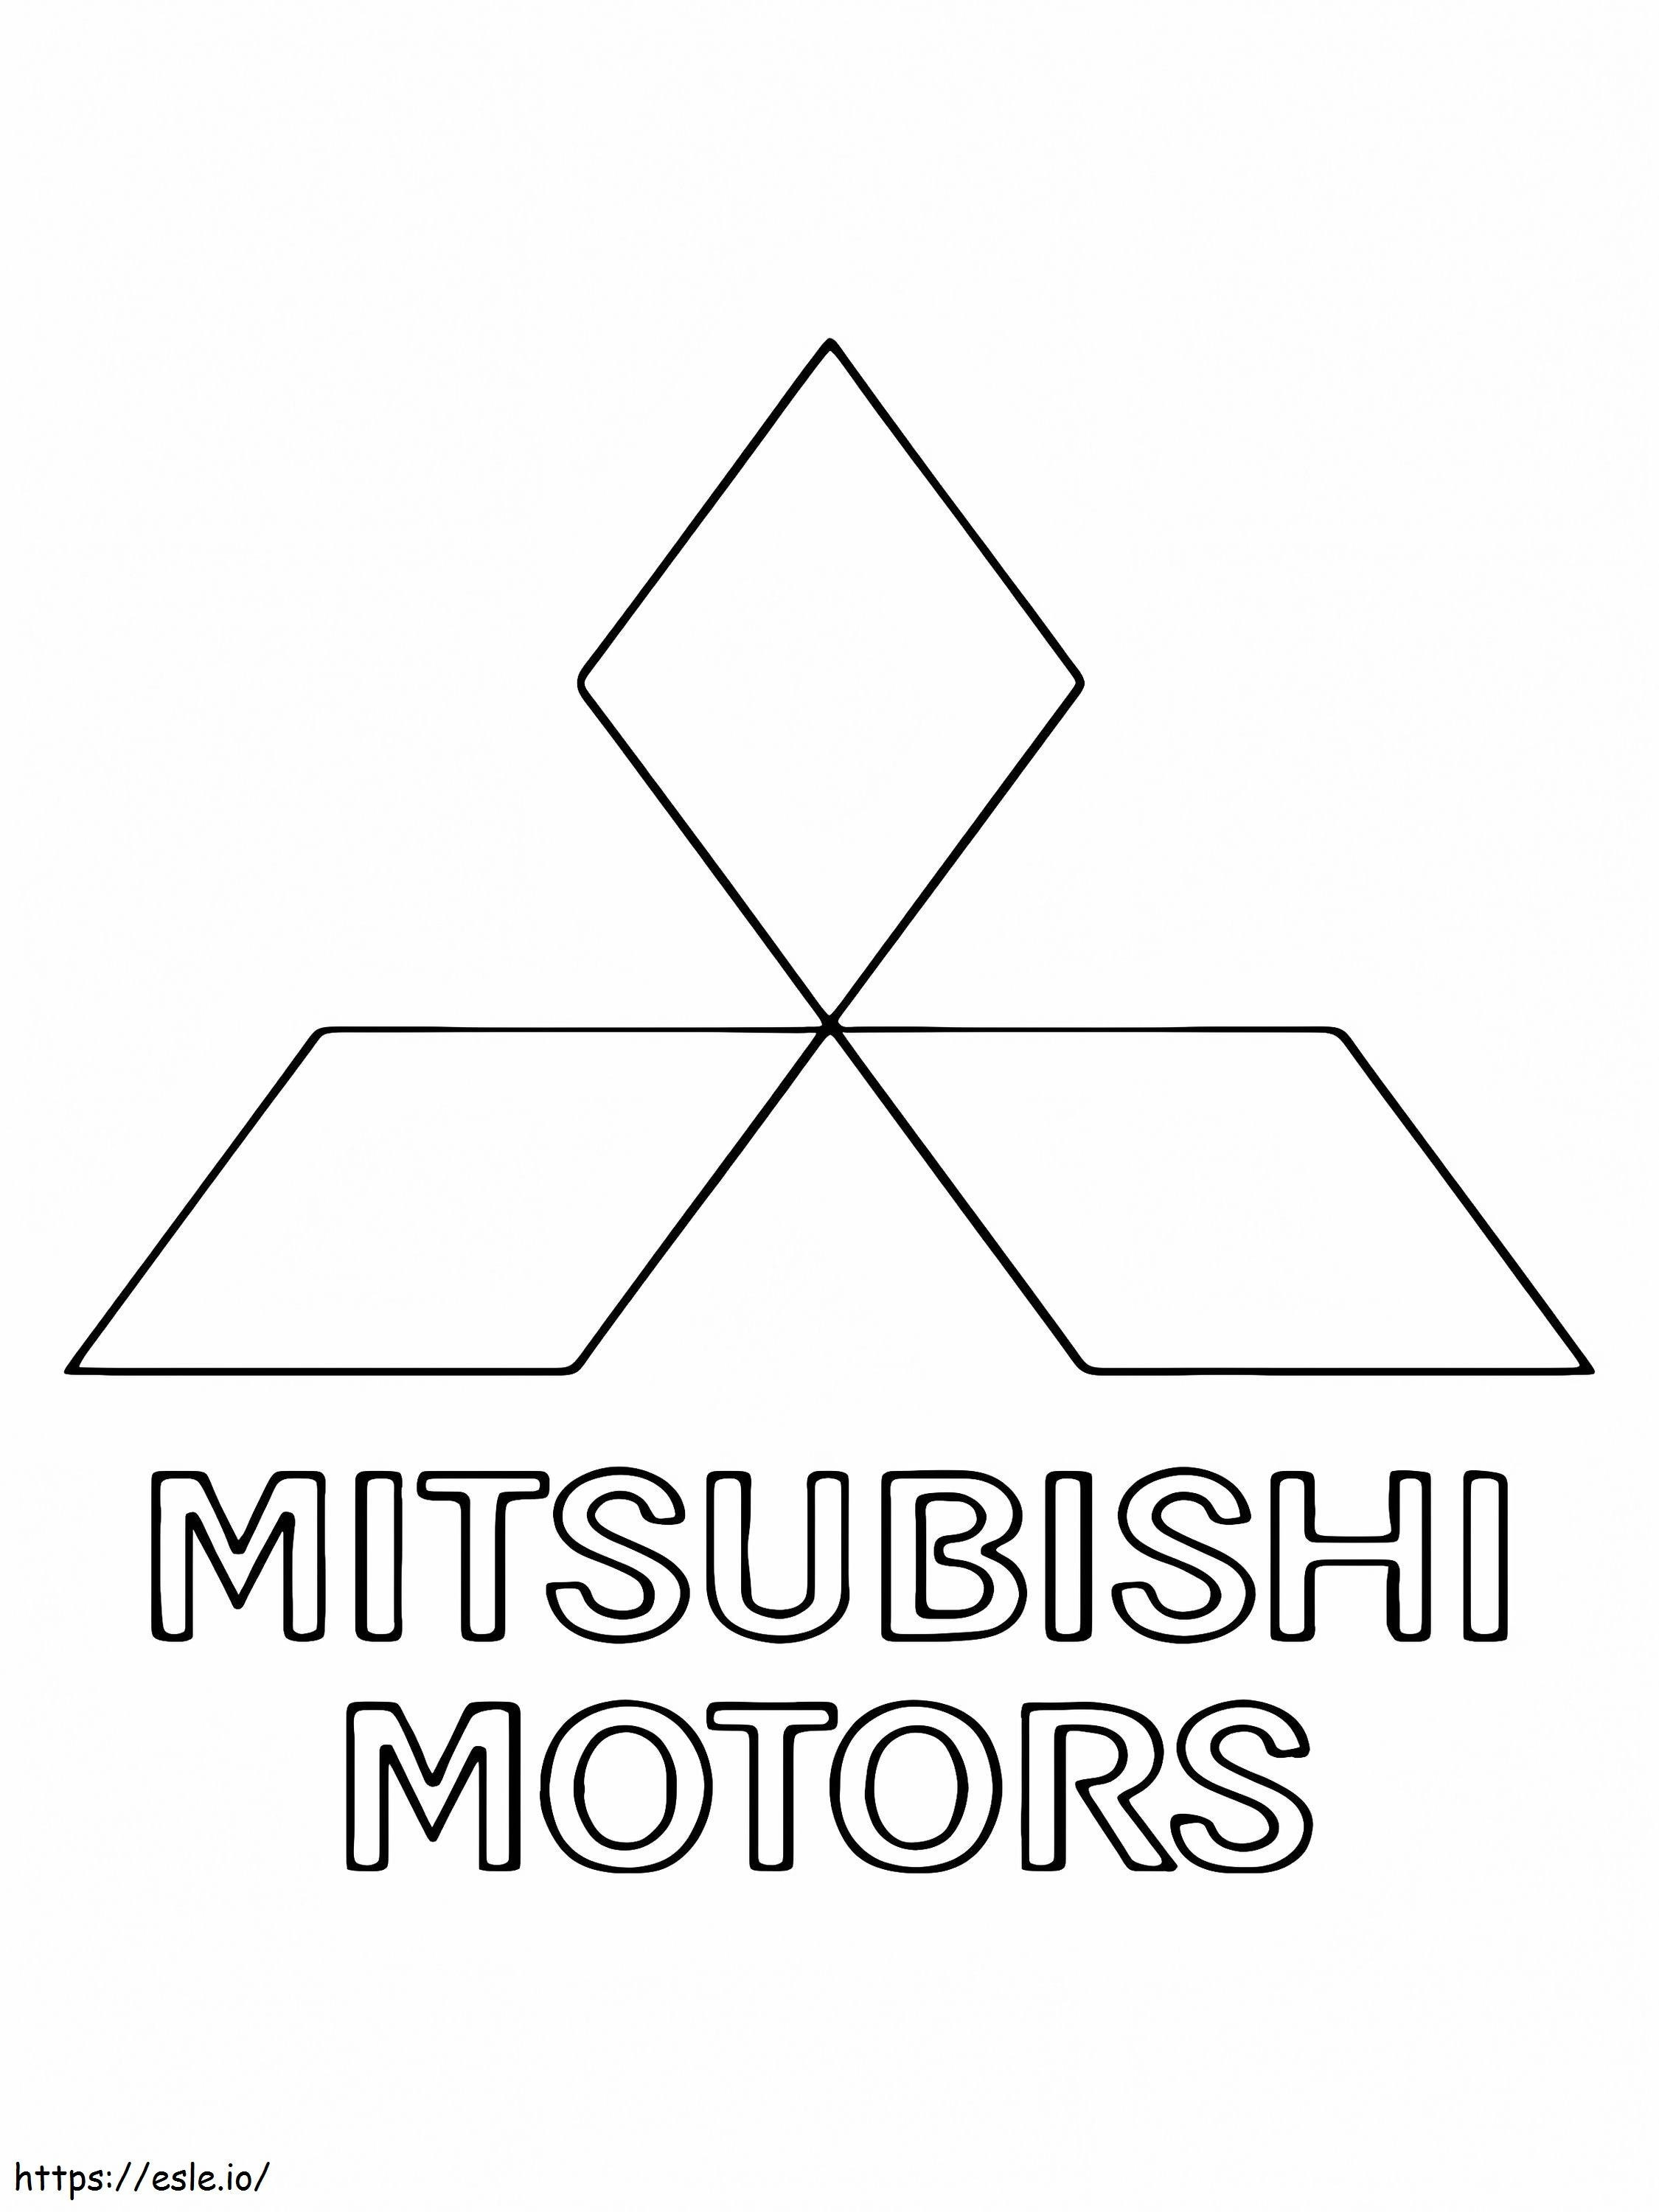 Logo samochodu Mitsubishi kolorowanka